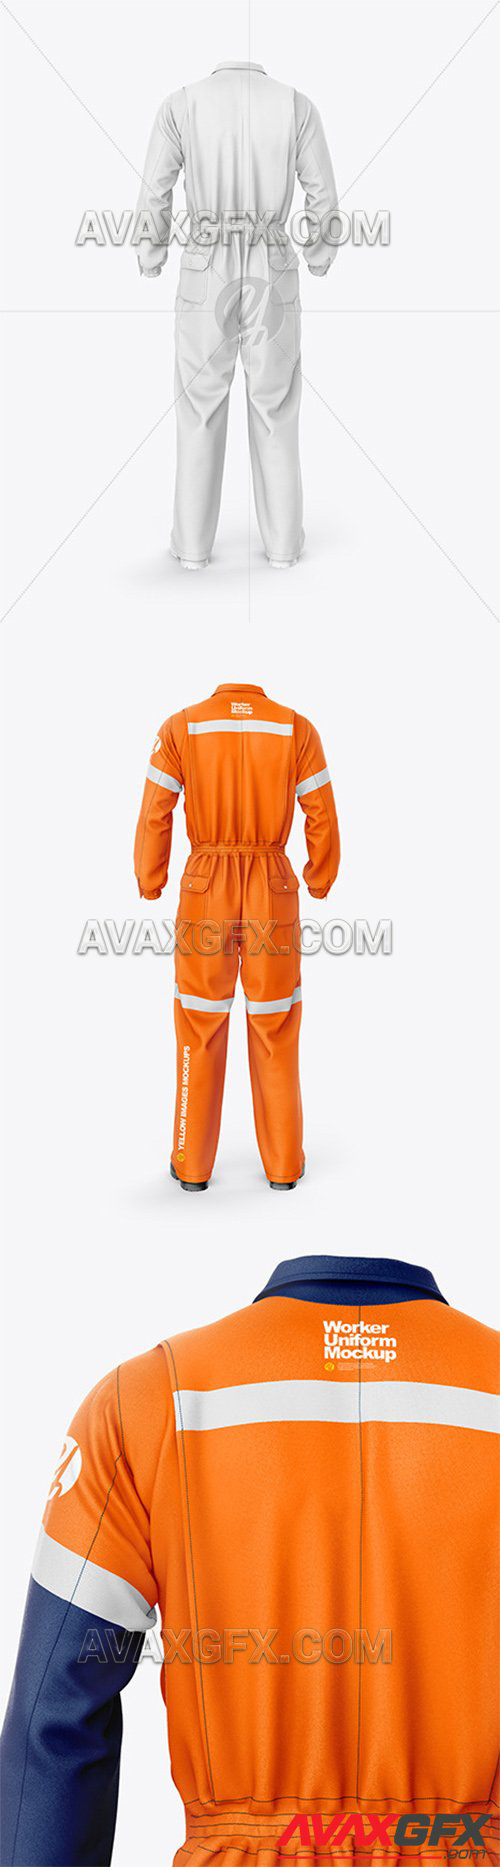 Worker Uniform Mockup - Back View 57264 » AVAXGFX - All ...